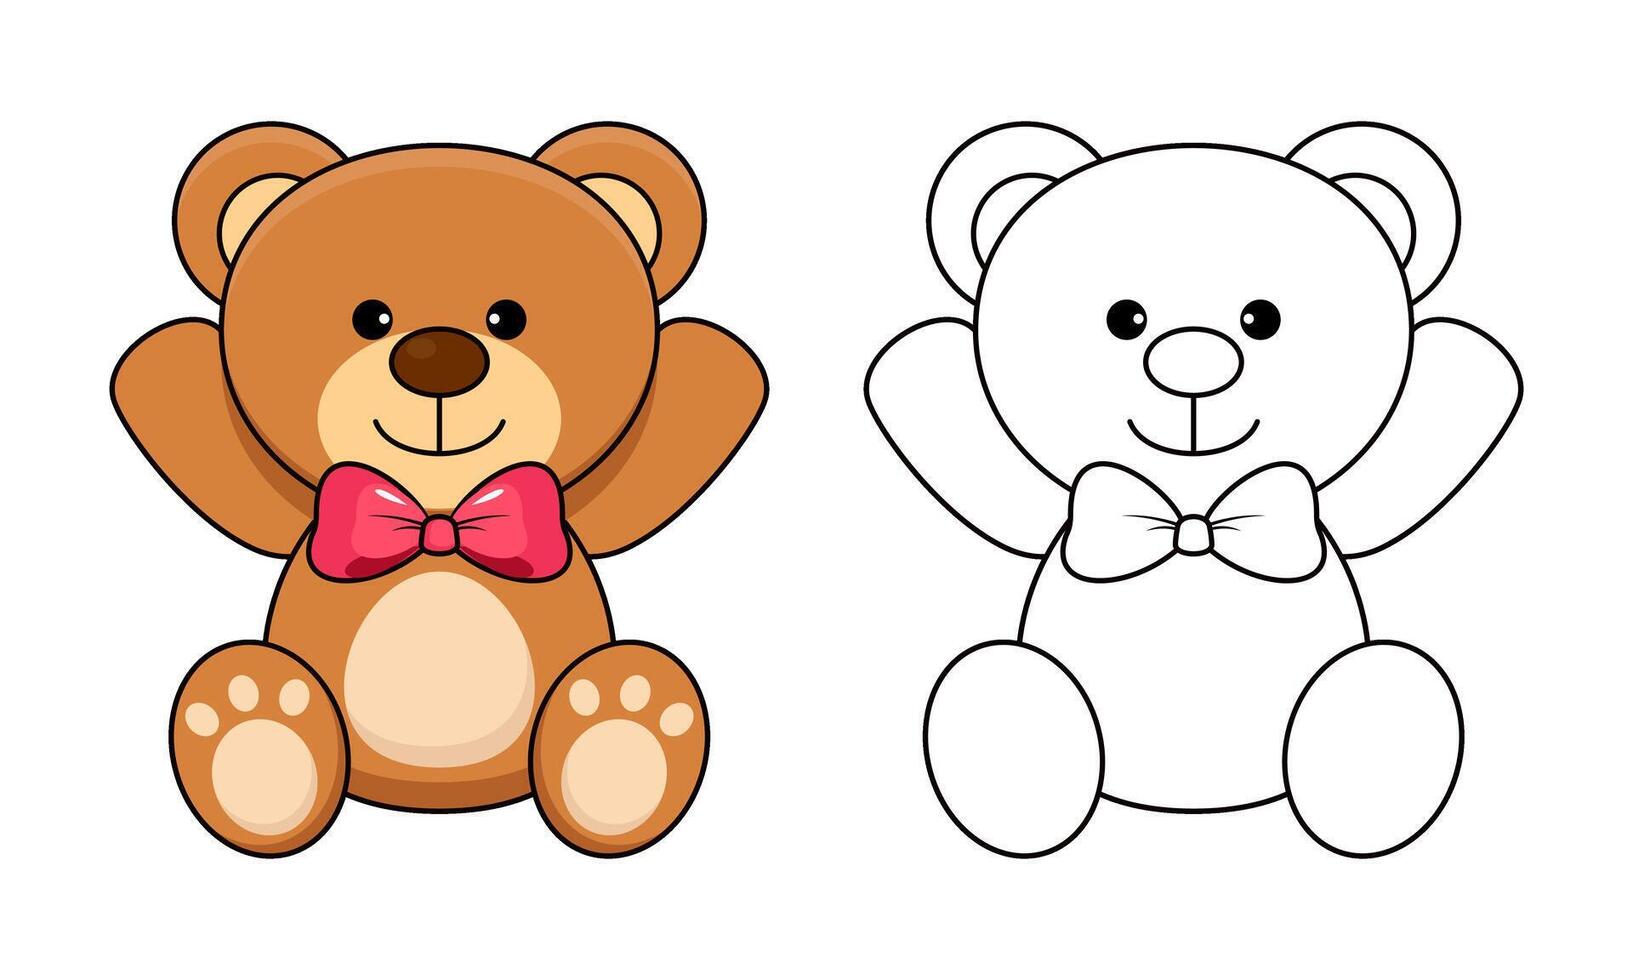 Doodles classic brown teddy bear vector